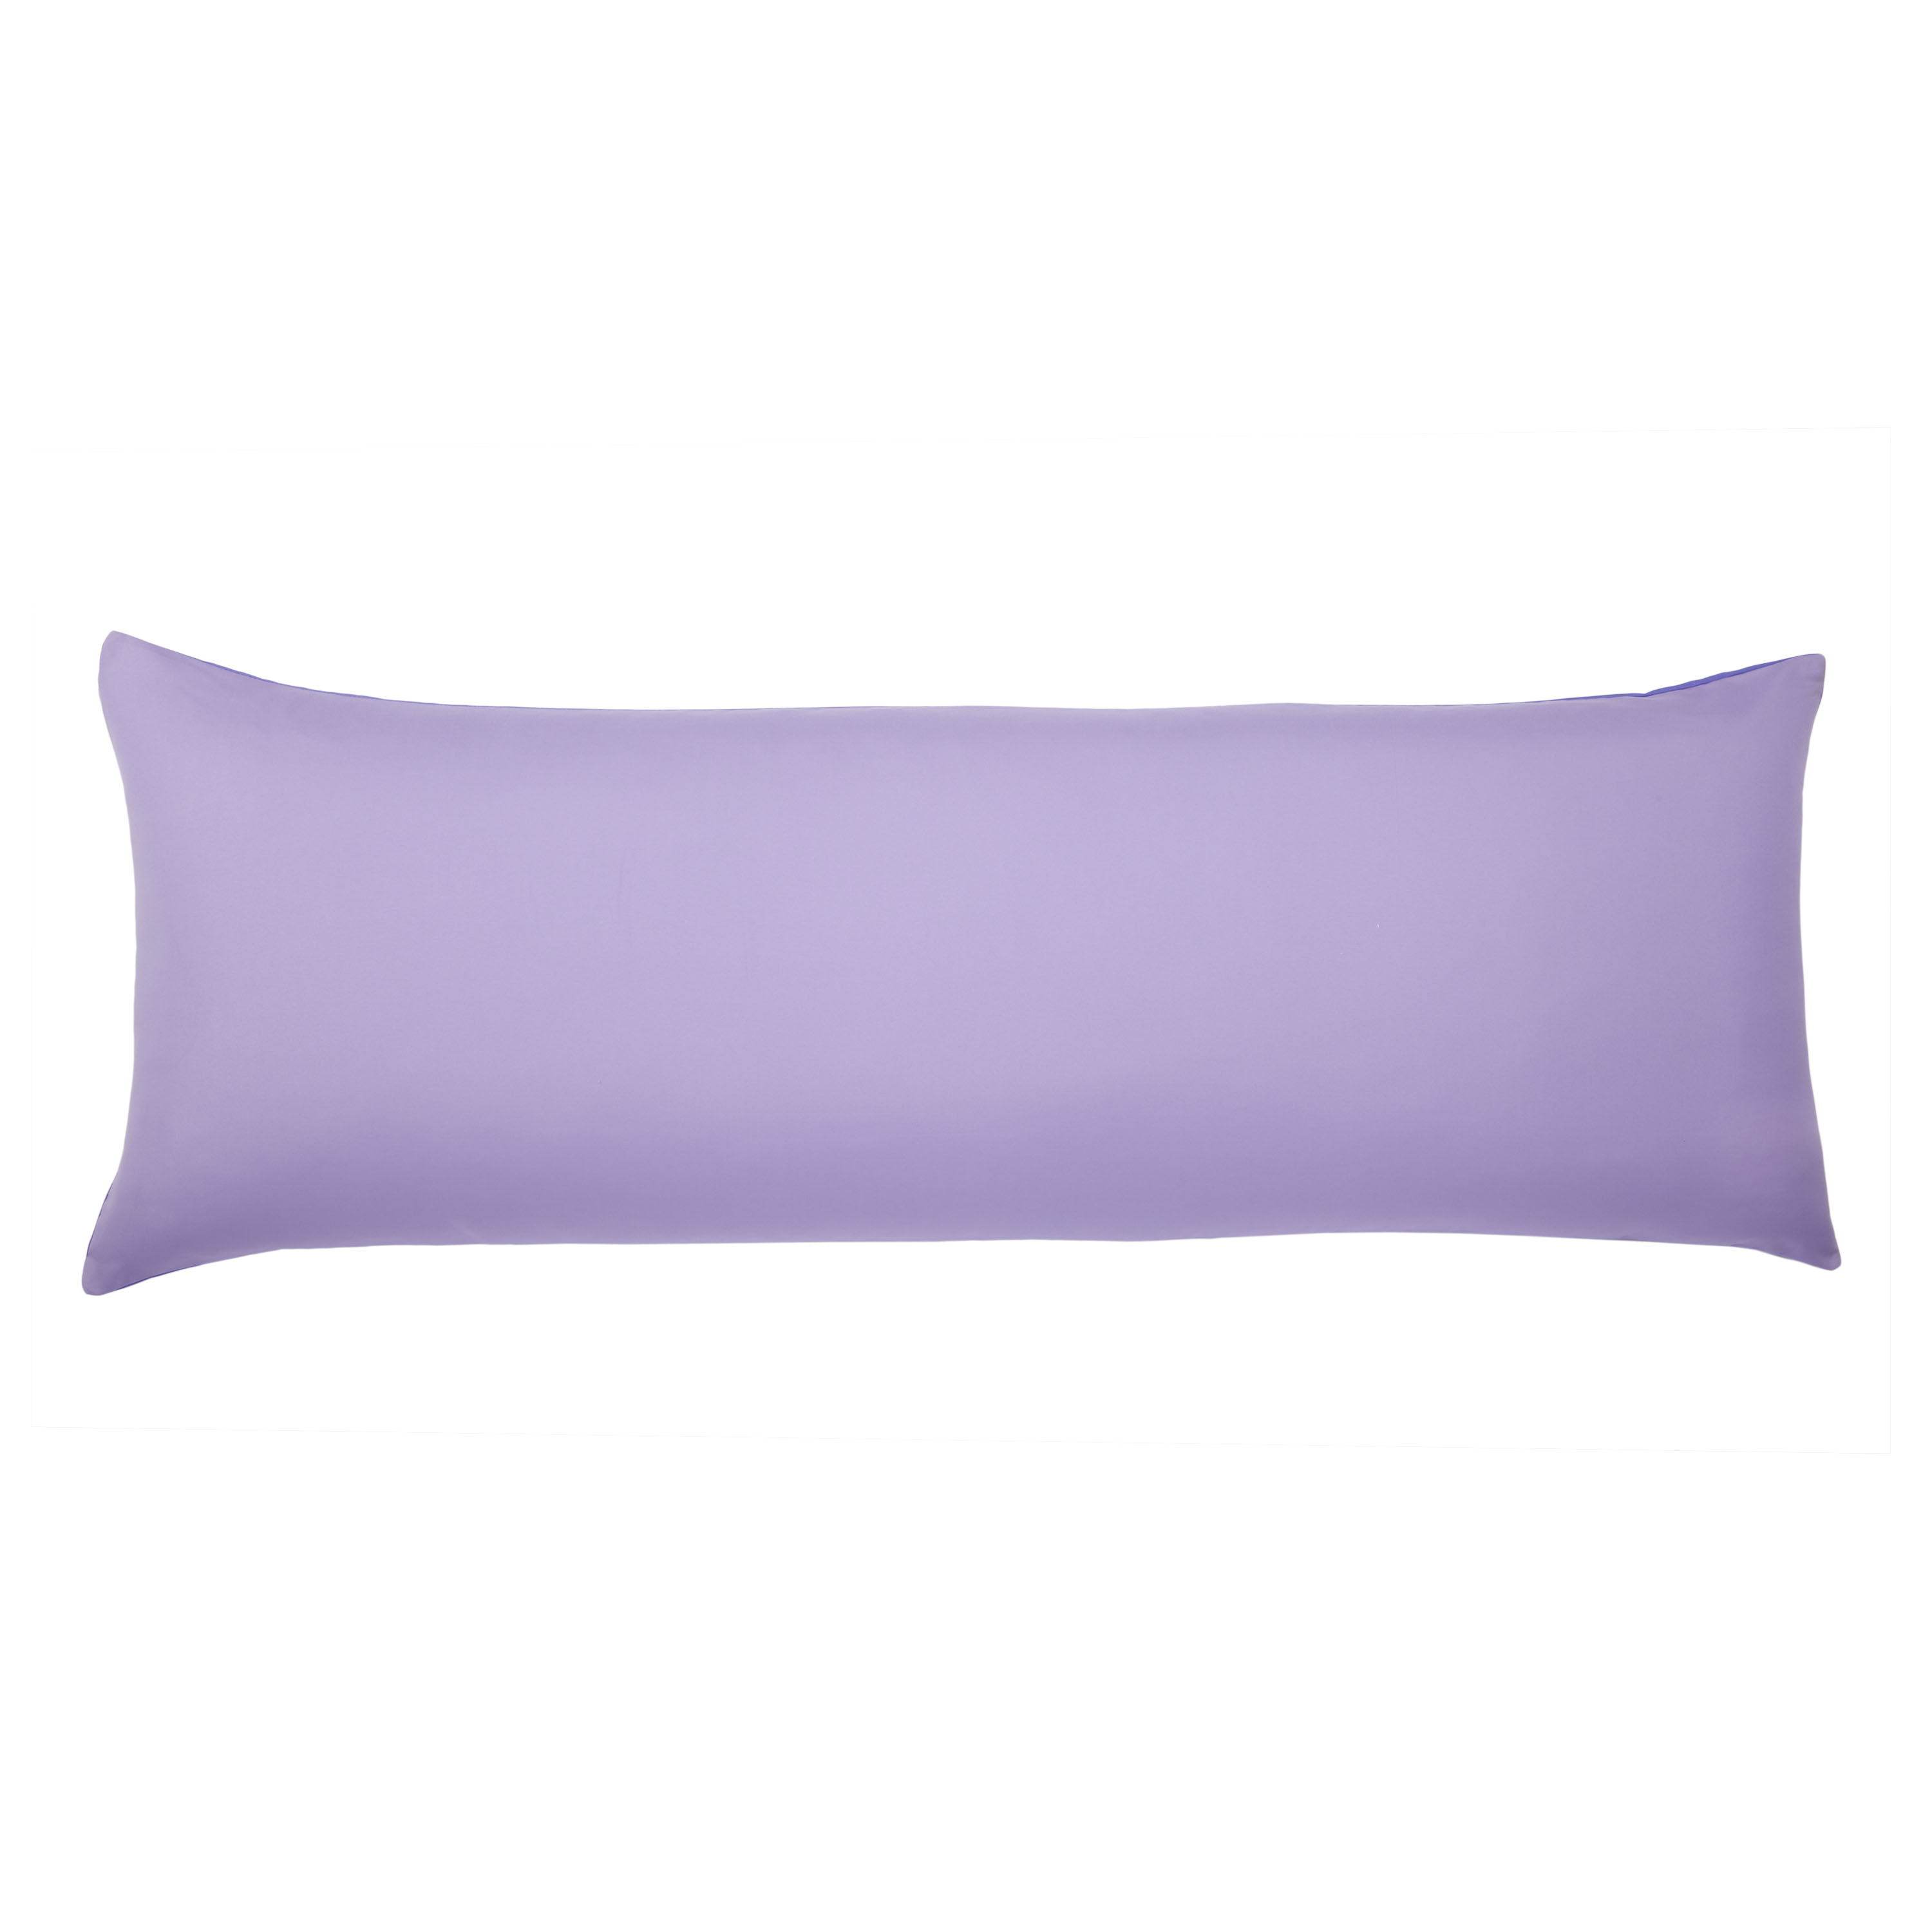 Disney Frozen Kids Body Pillow Cover with Zipper Closure, Purple ...